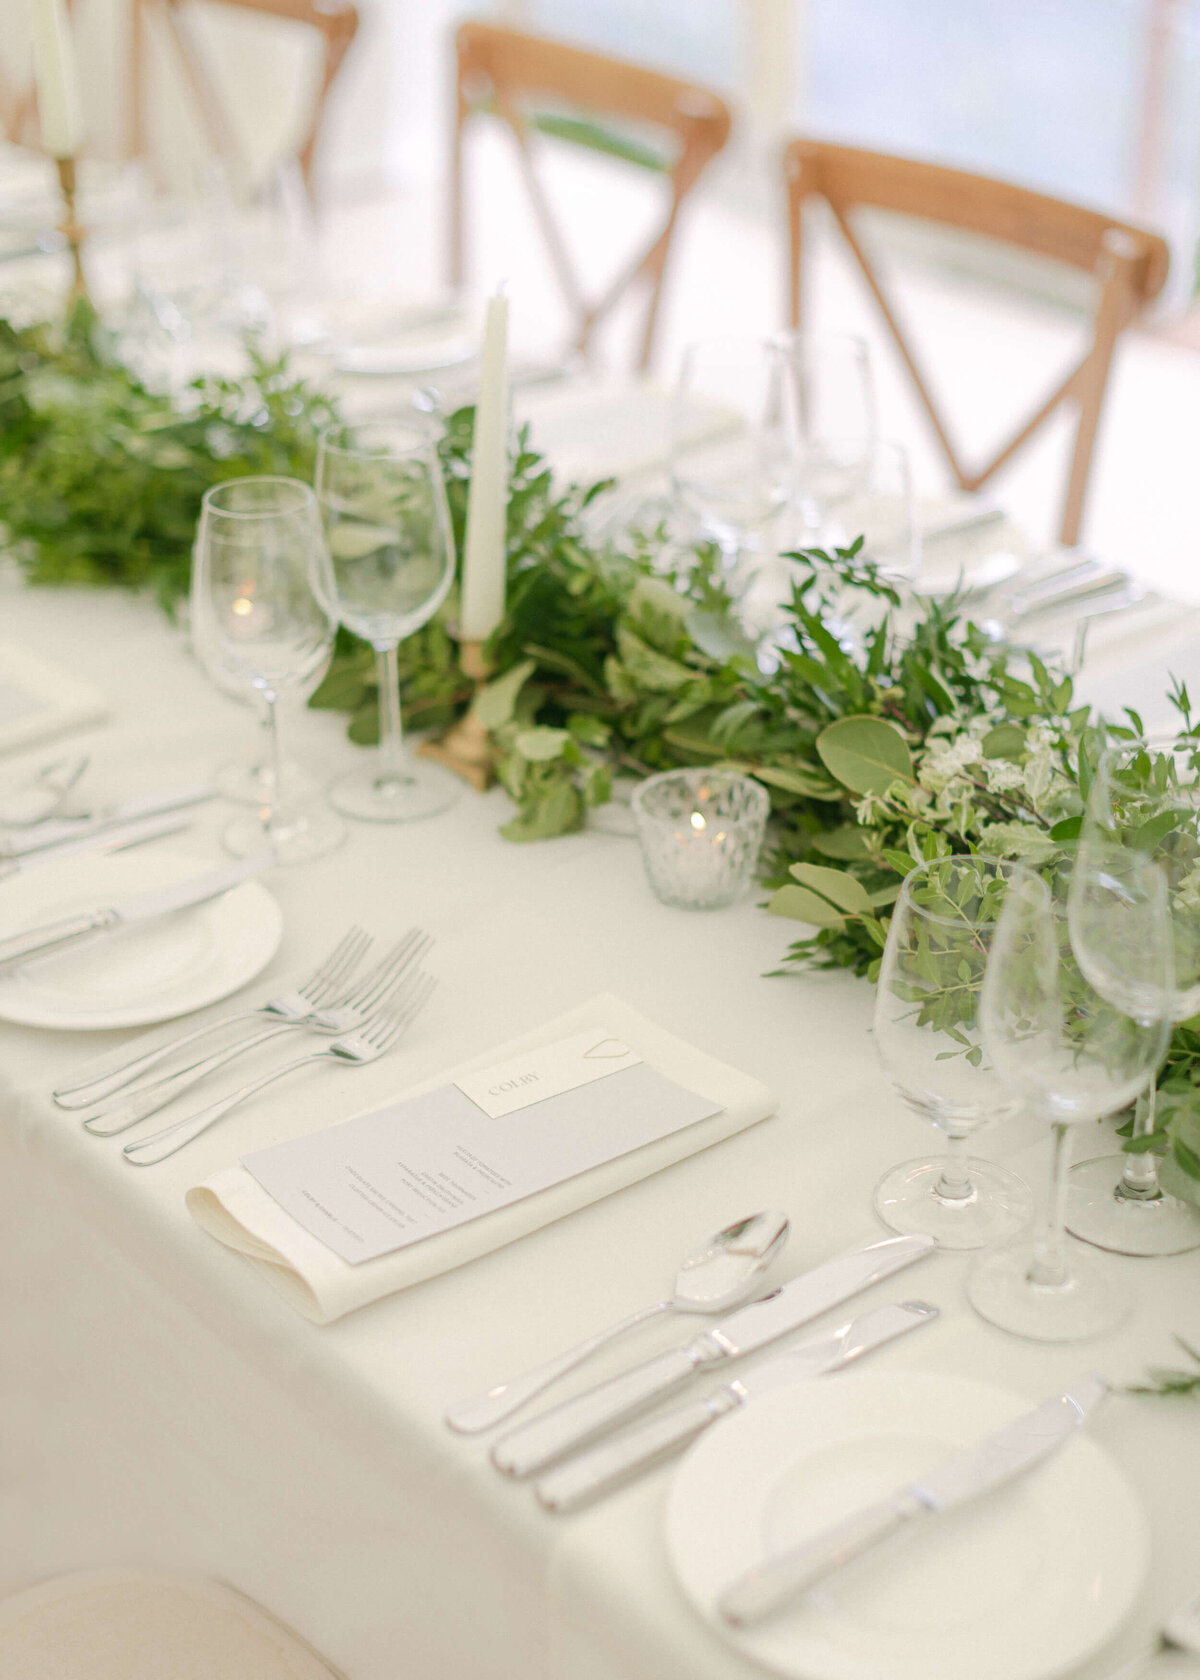 chloe-winstanley-weddings-green-white-place-setting-foliage